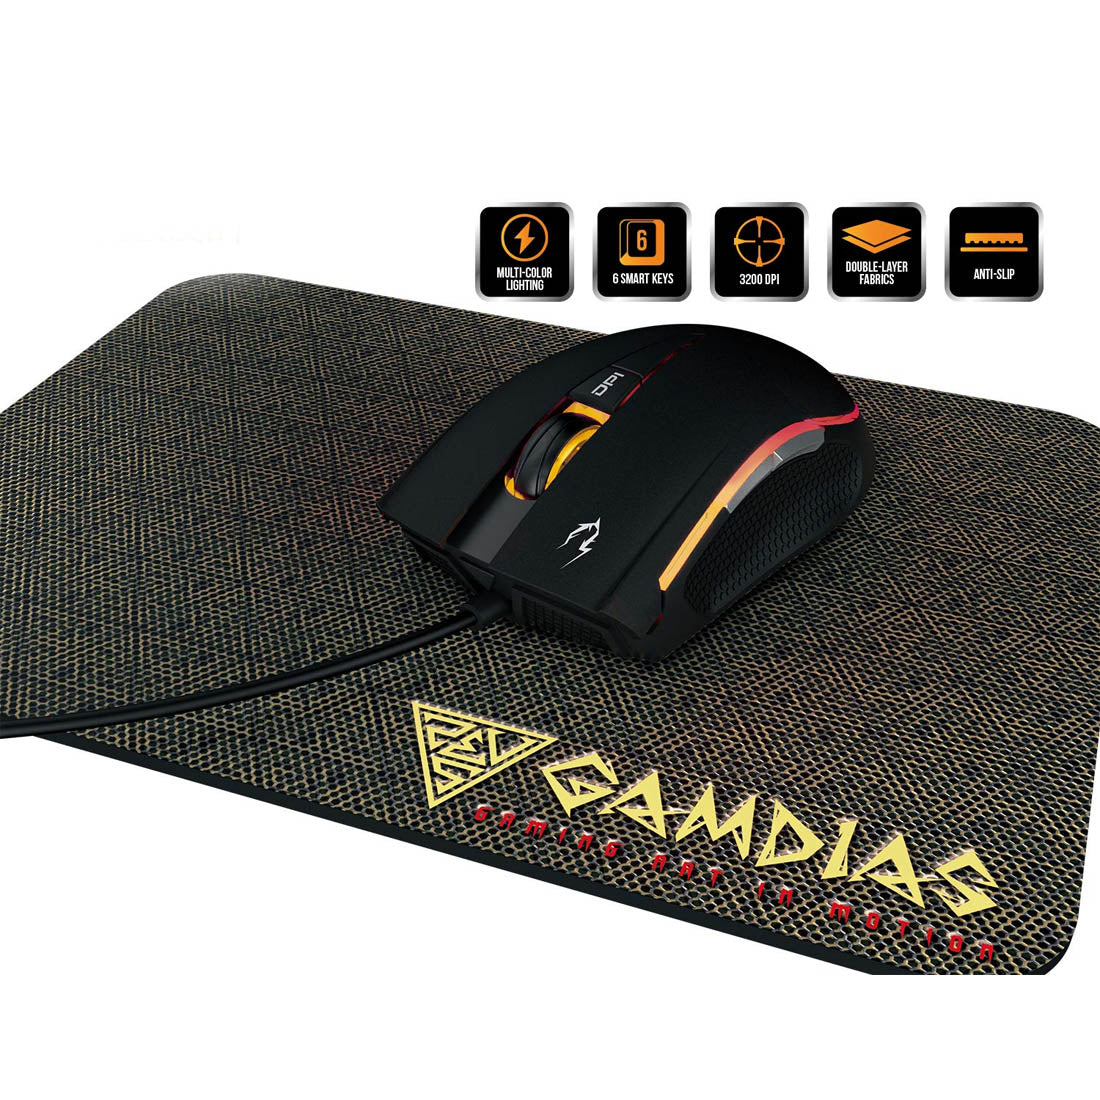 Gamdias ZEUS E2 Gaming Optical Mouse and NYX E1 Gaming MousePad Combo